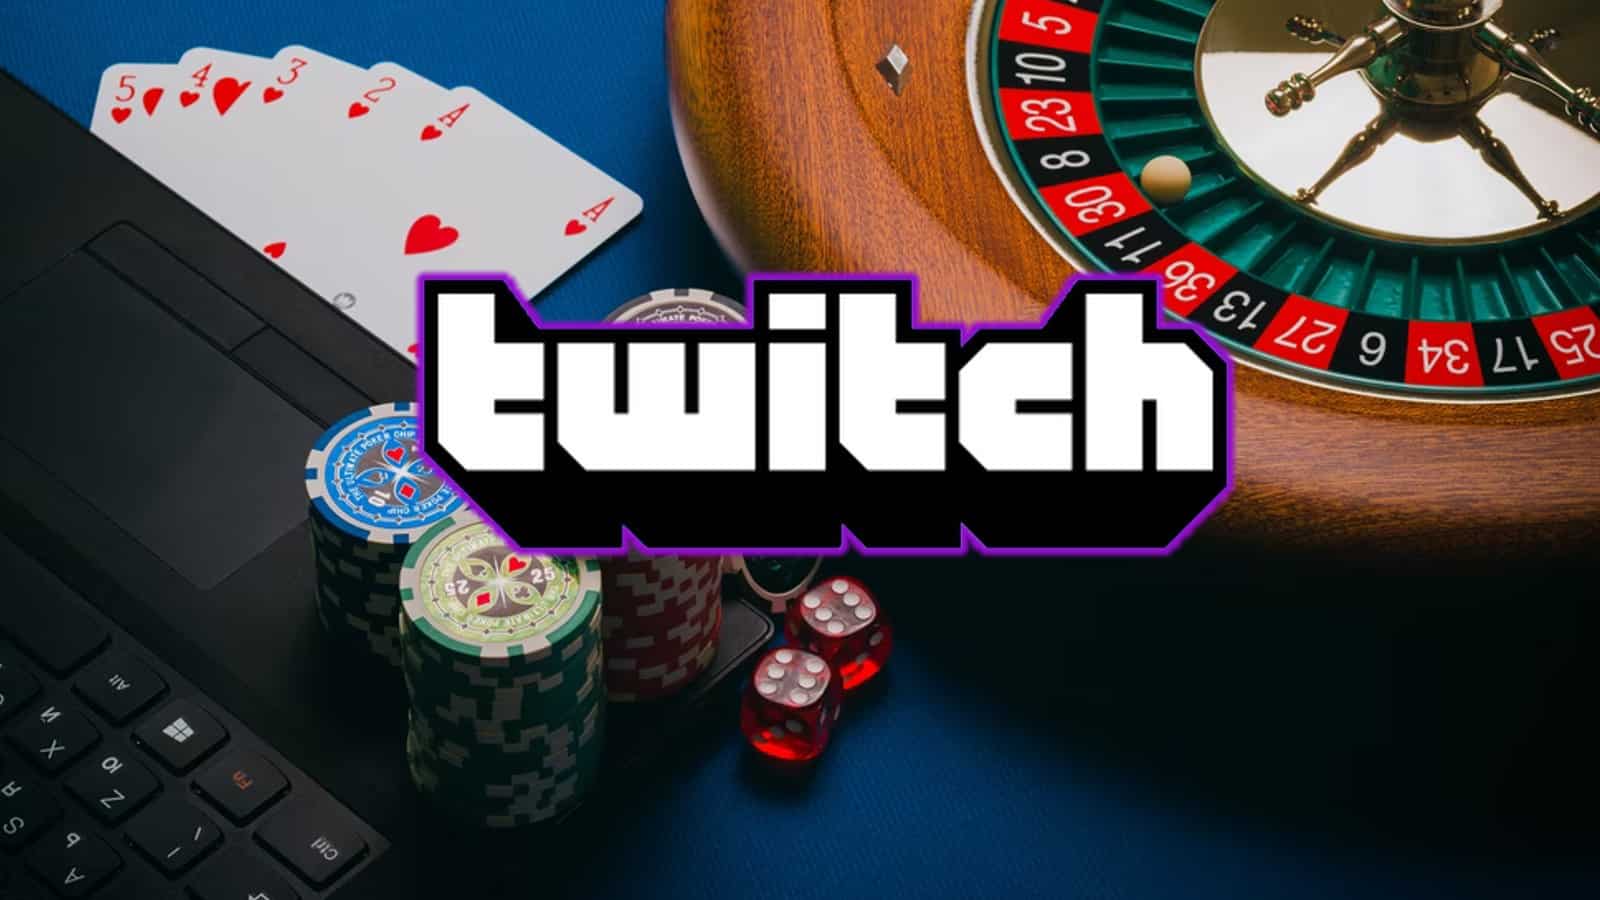 Twitch logo over gambling casino image